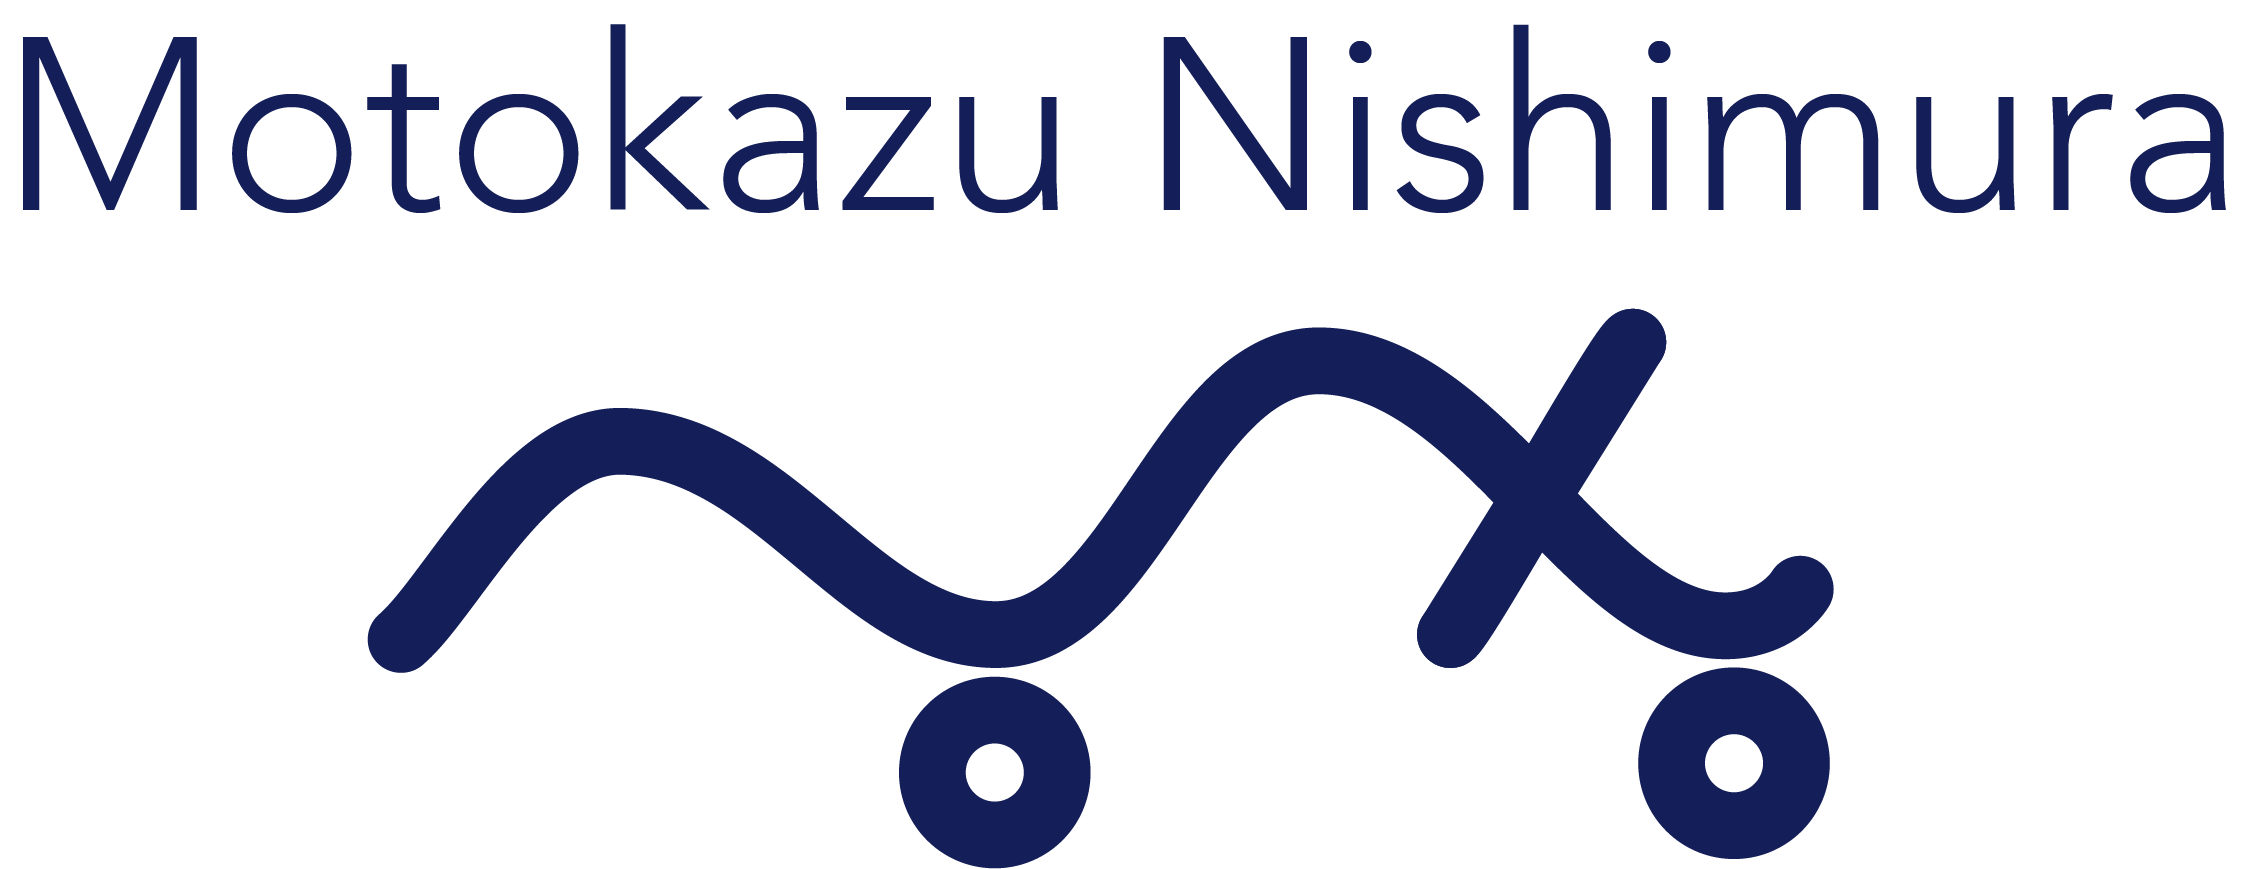 Motokazu Nishimura